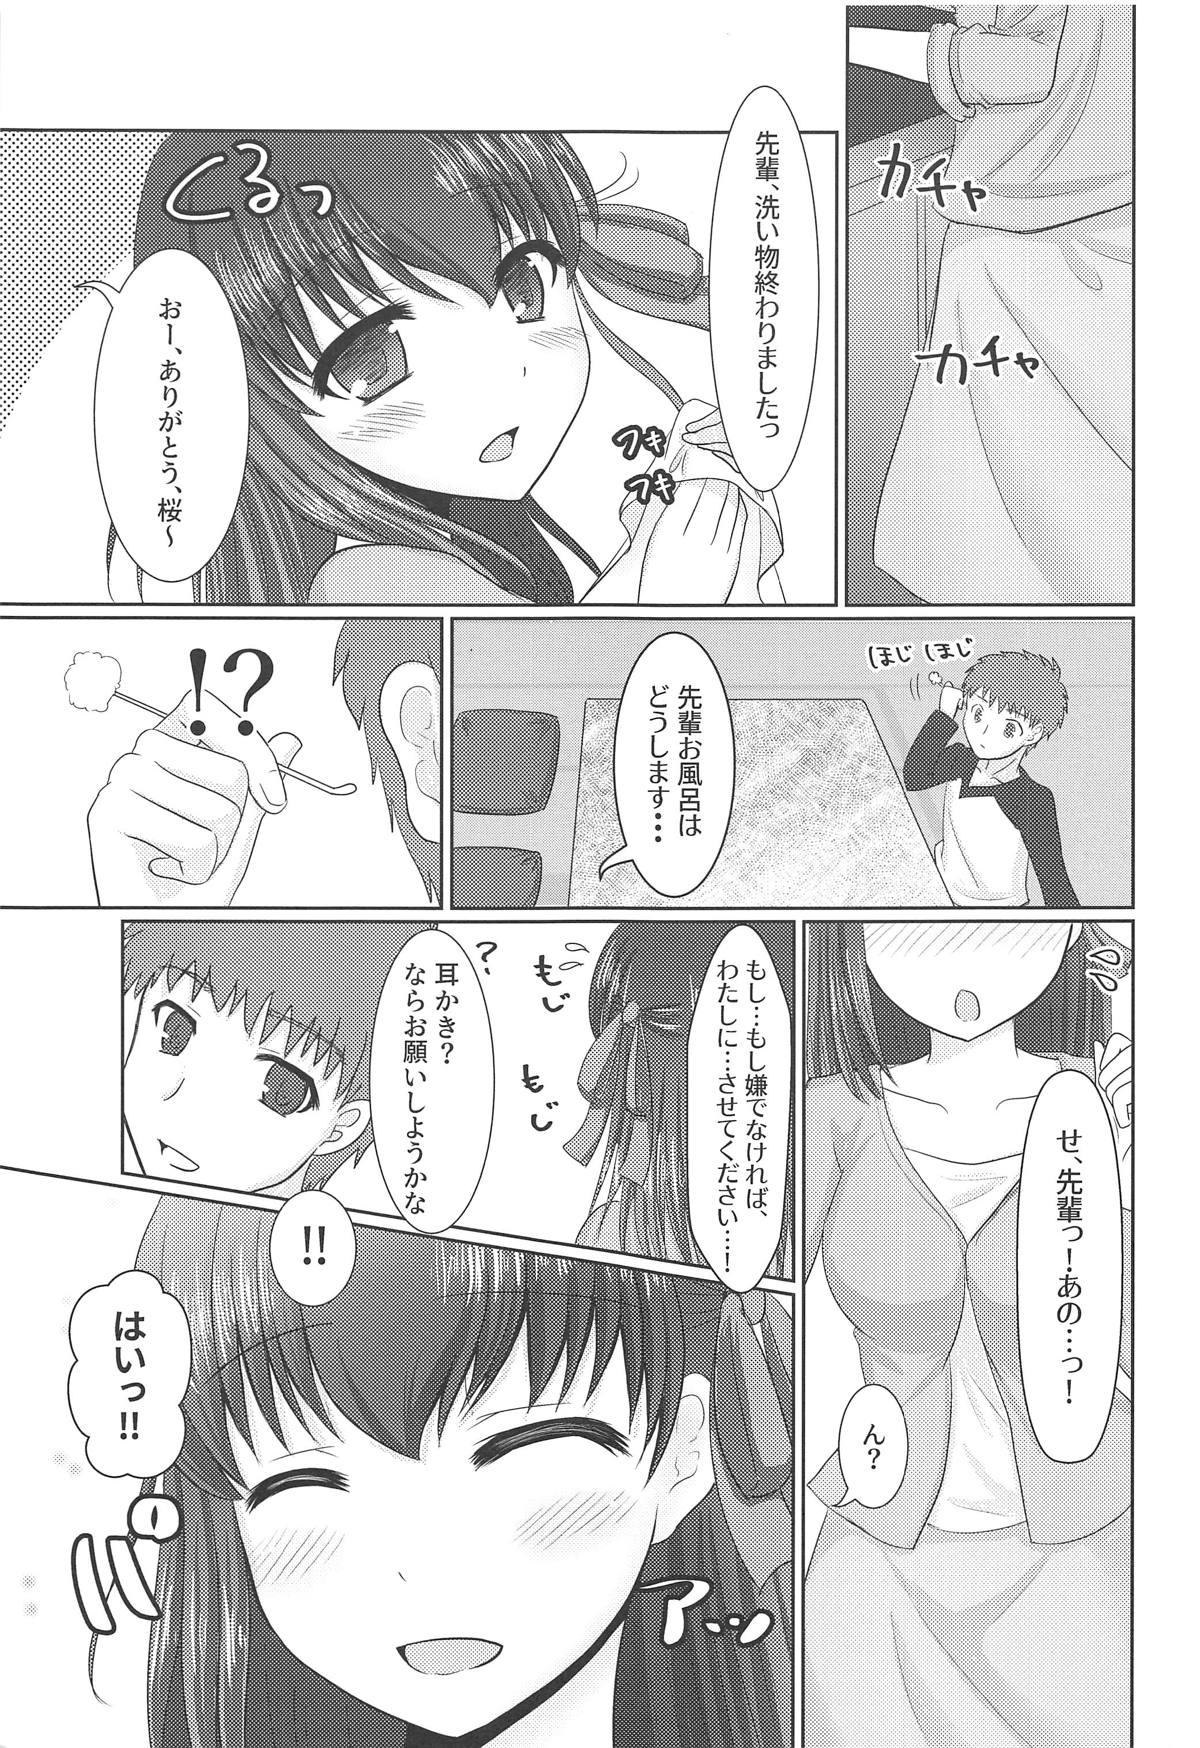 Cums Hiza no Ue ni Sakura - Fate stay night Large - Page 4